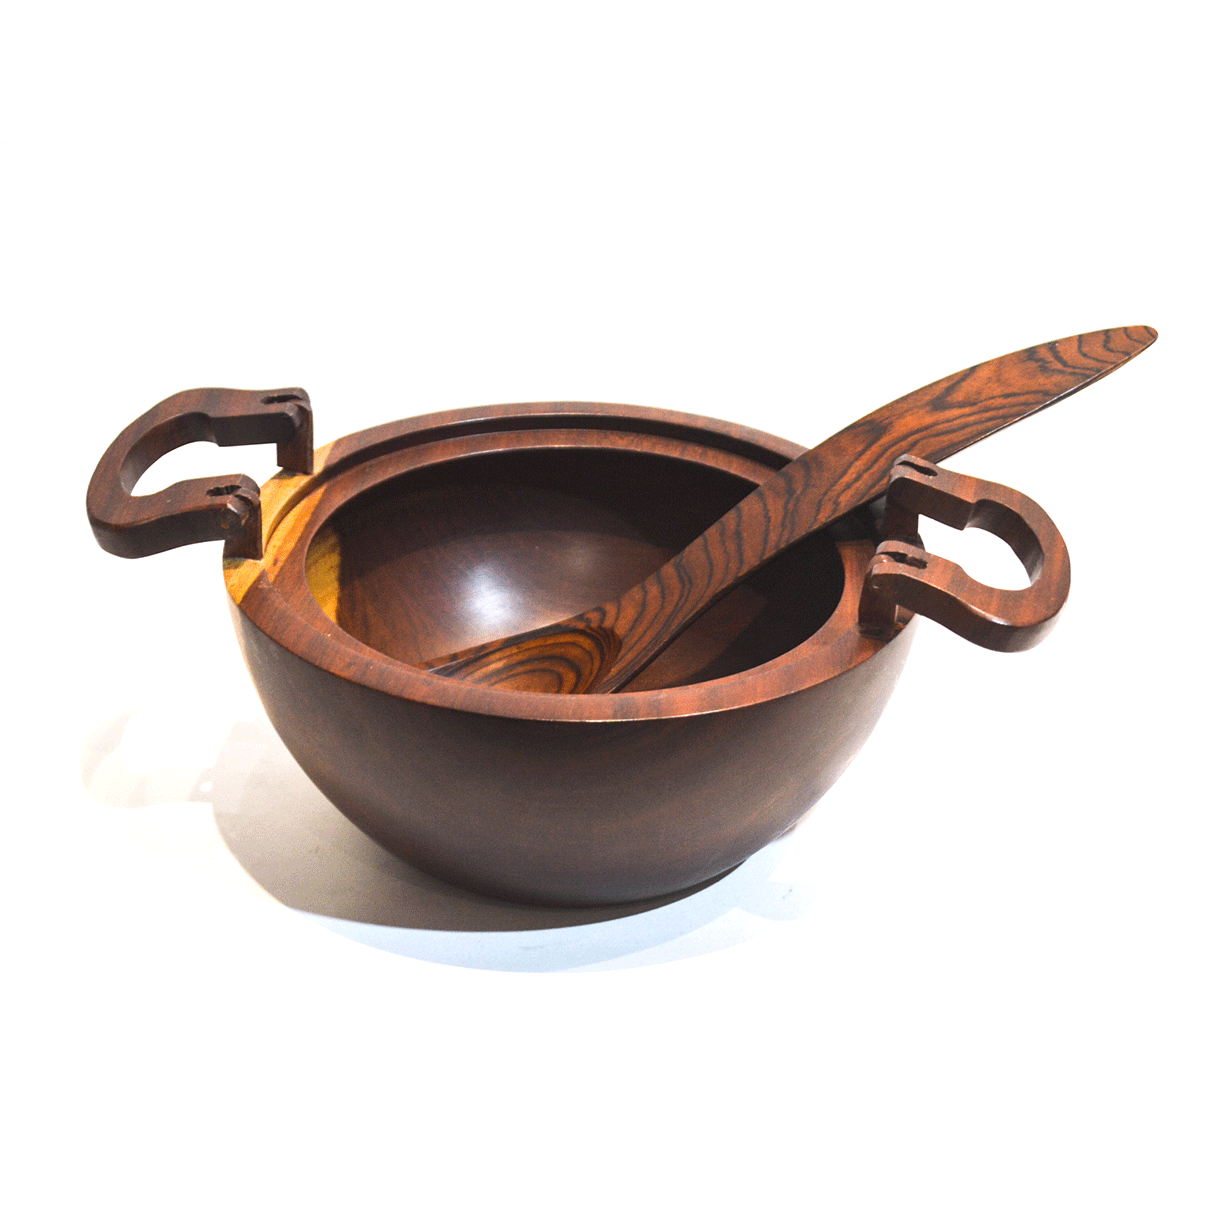 www.costaricacongo.com www.costaricagiftshops.com gift souvenir handmade Wooden rice bowl 6" with spoon